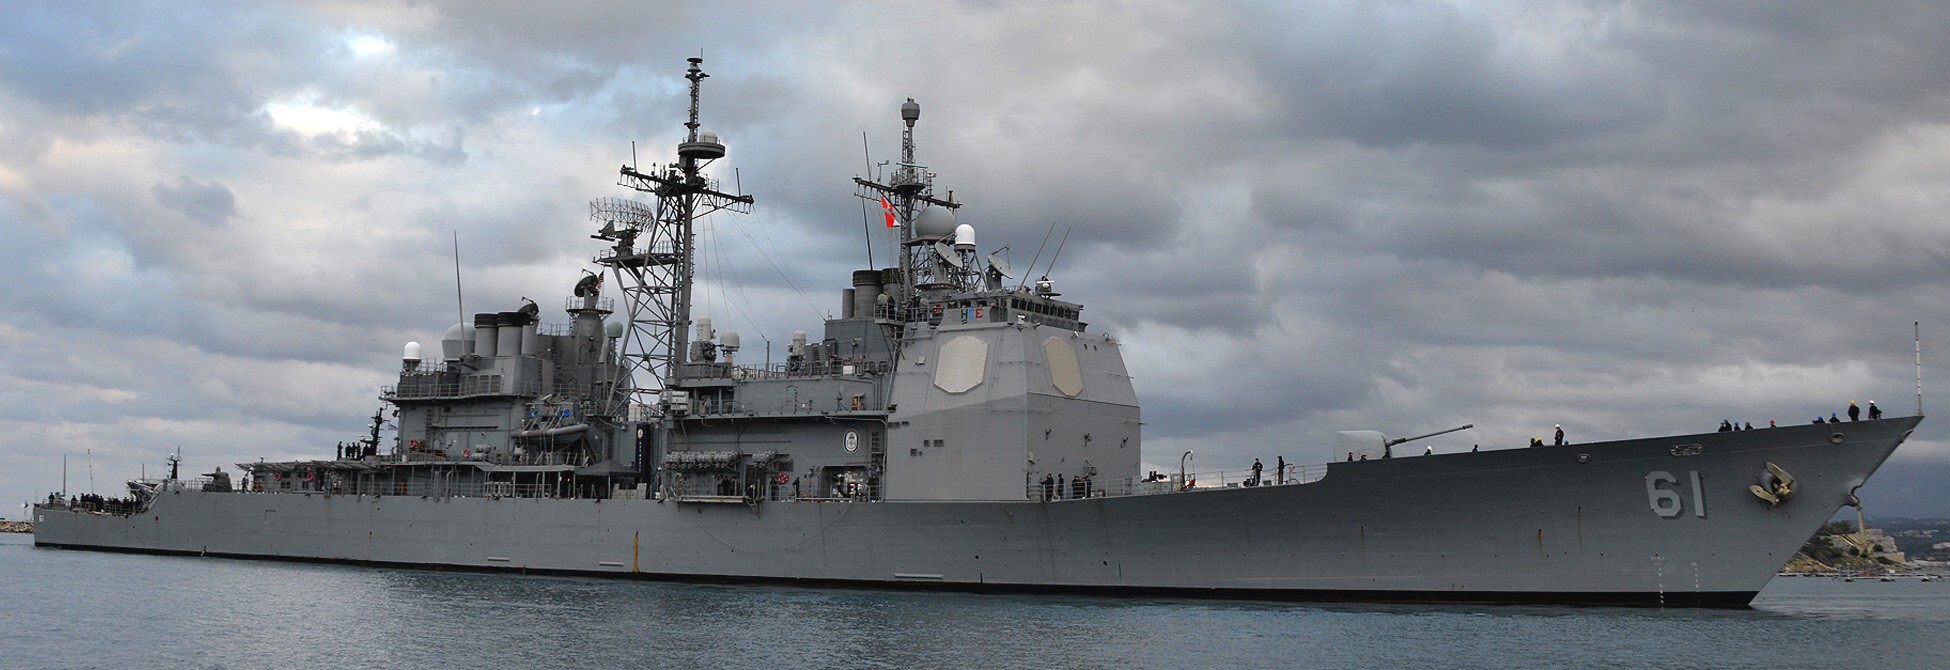 cg-61 uss monterey ticonderoga class guided missile cruiser aegis us navy nsa souda bay greece 70